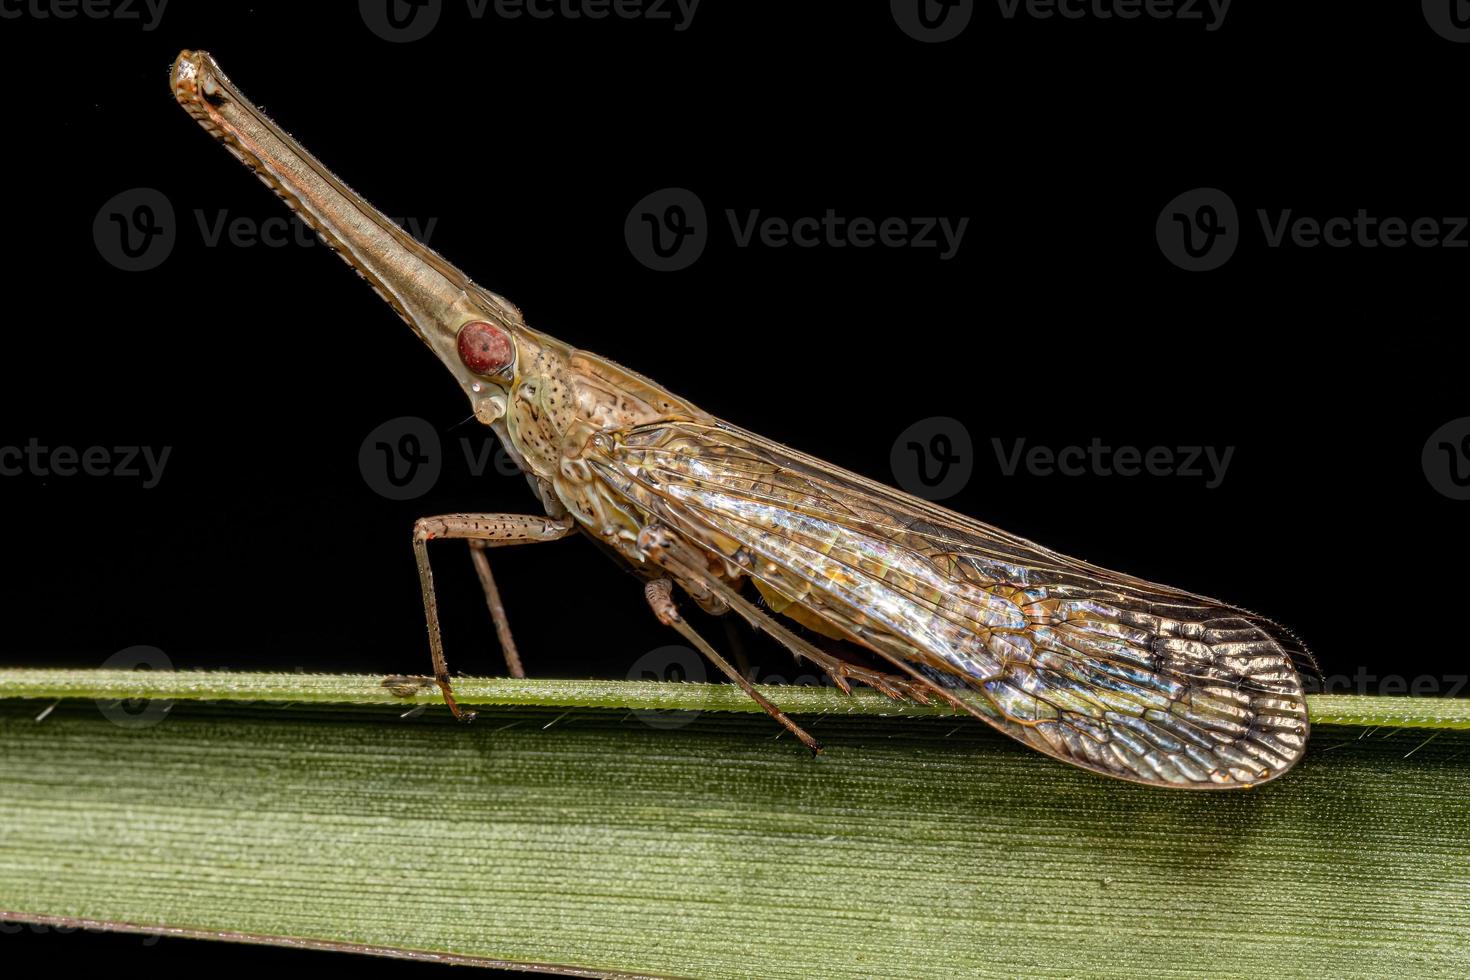 vuxen dictyopharid planthopper insekt foto